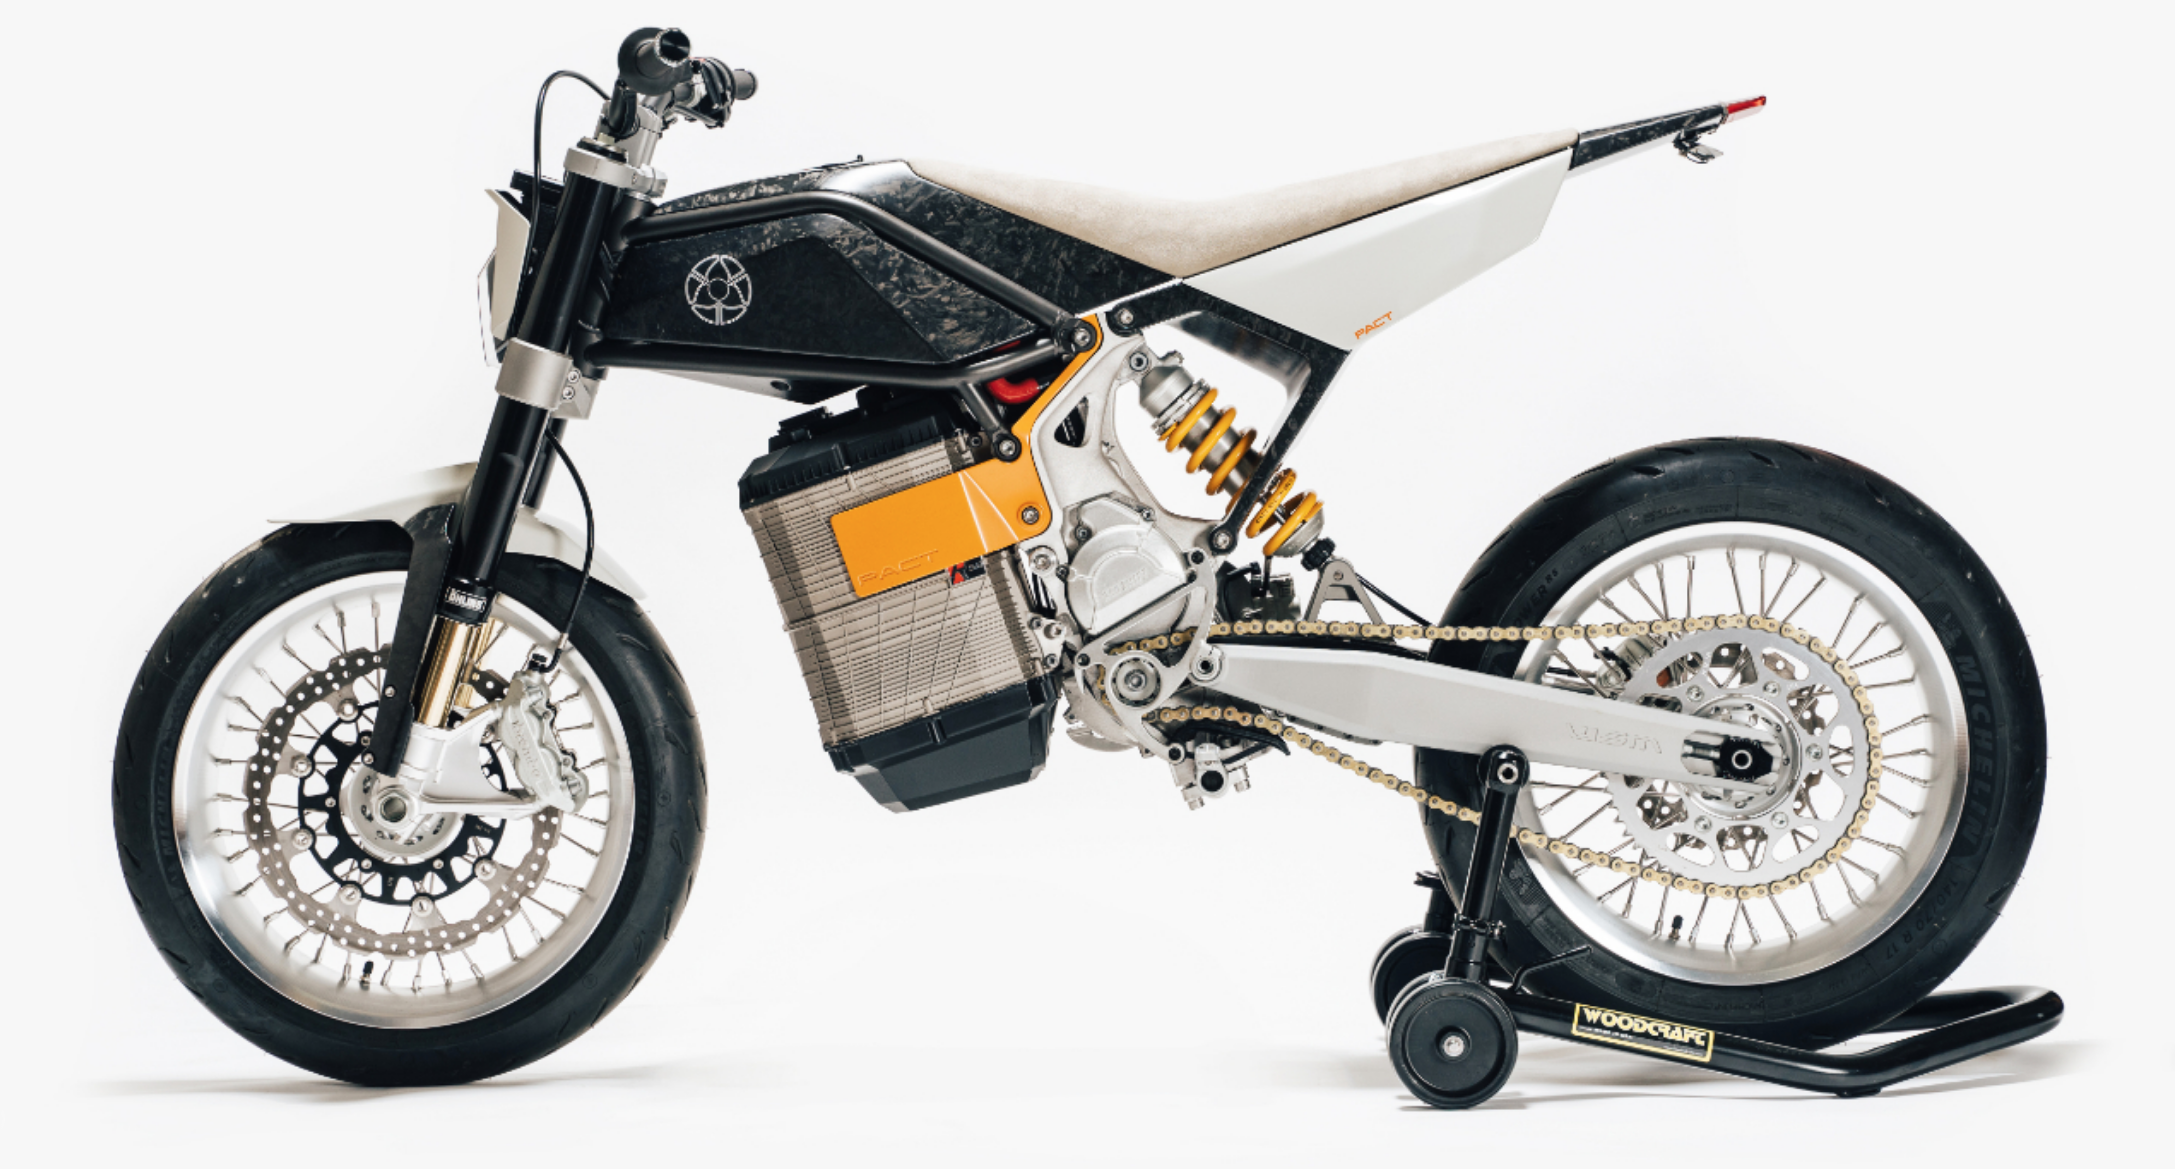 Walt Siegl custom electric Alta motorcycle - left side